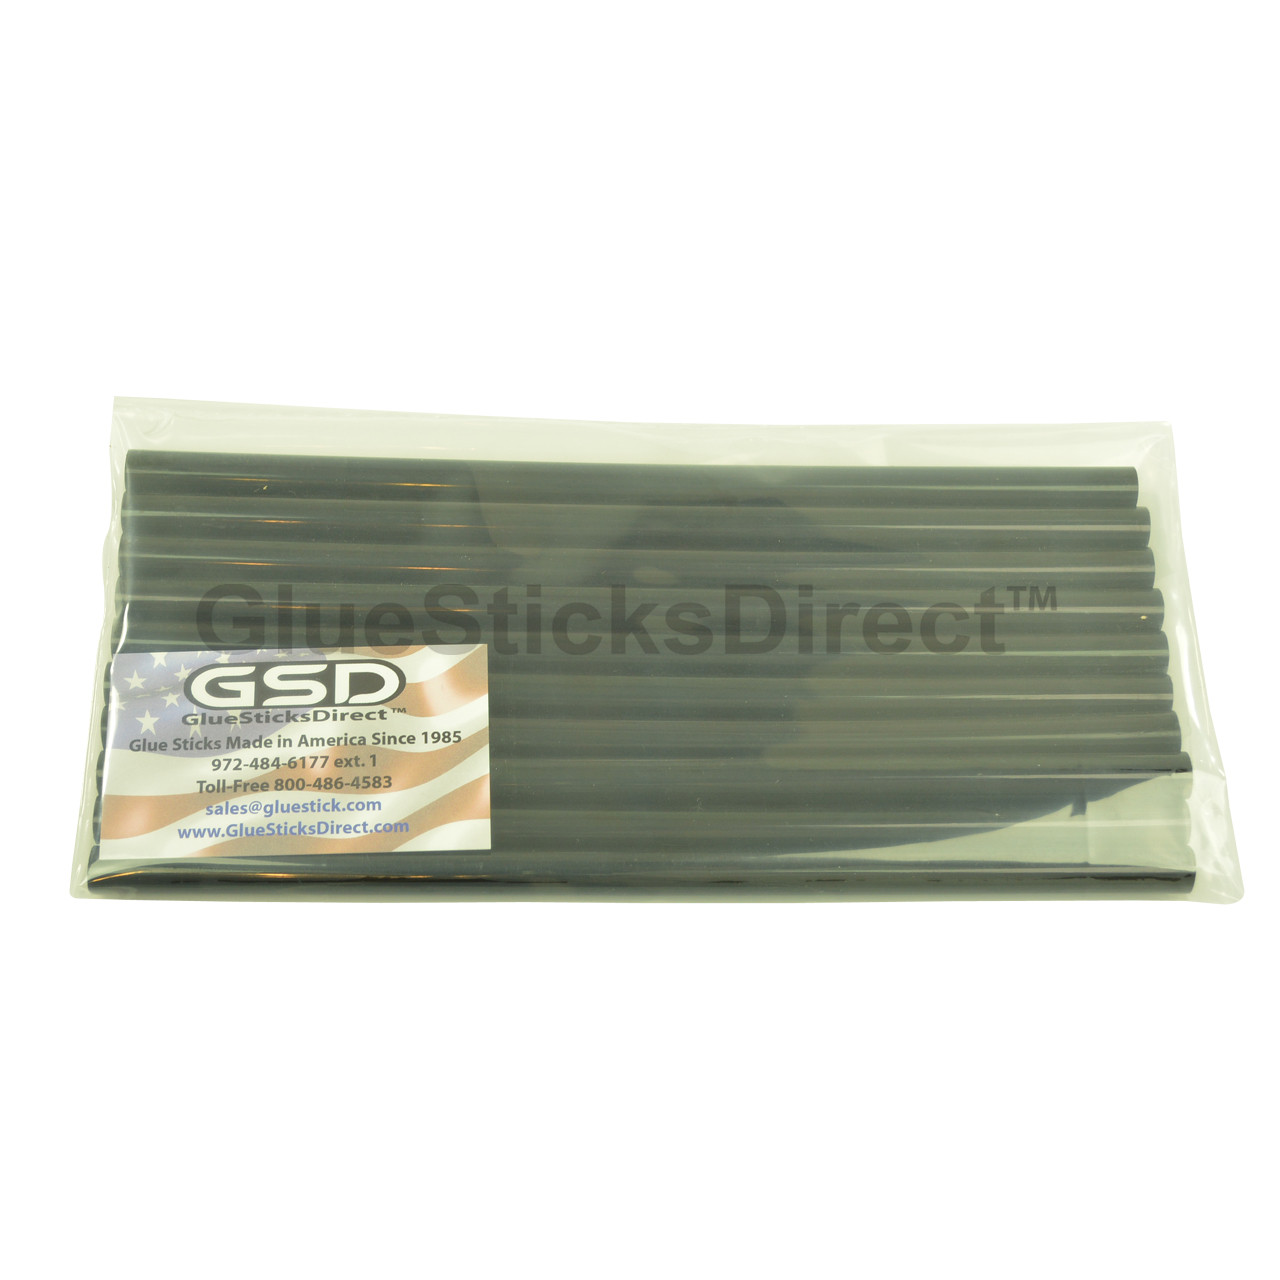 GlueSticksDirect  Paintless Dent Removal Sticks 10 Black 7/16" X 10" sticks 11mm x 254mm PDR